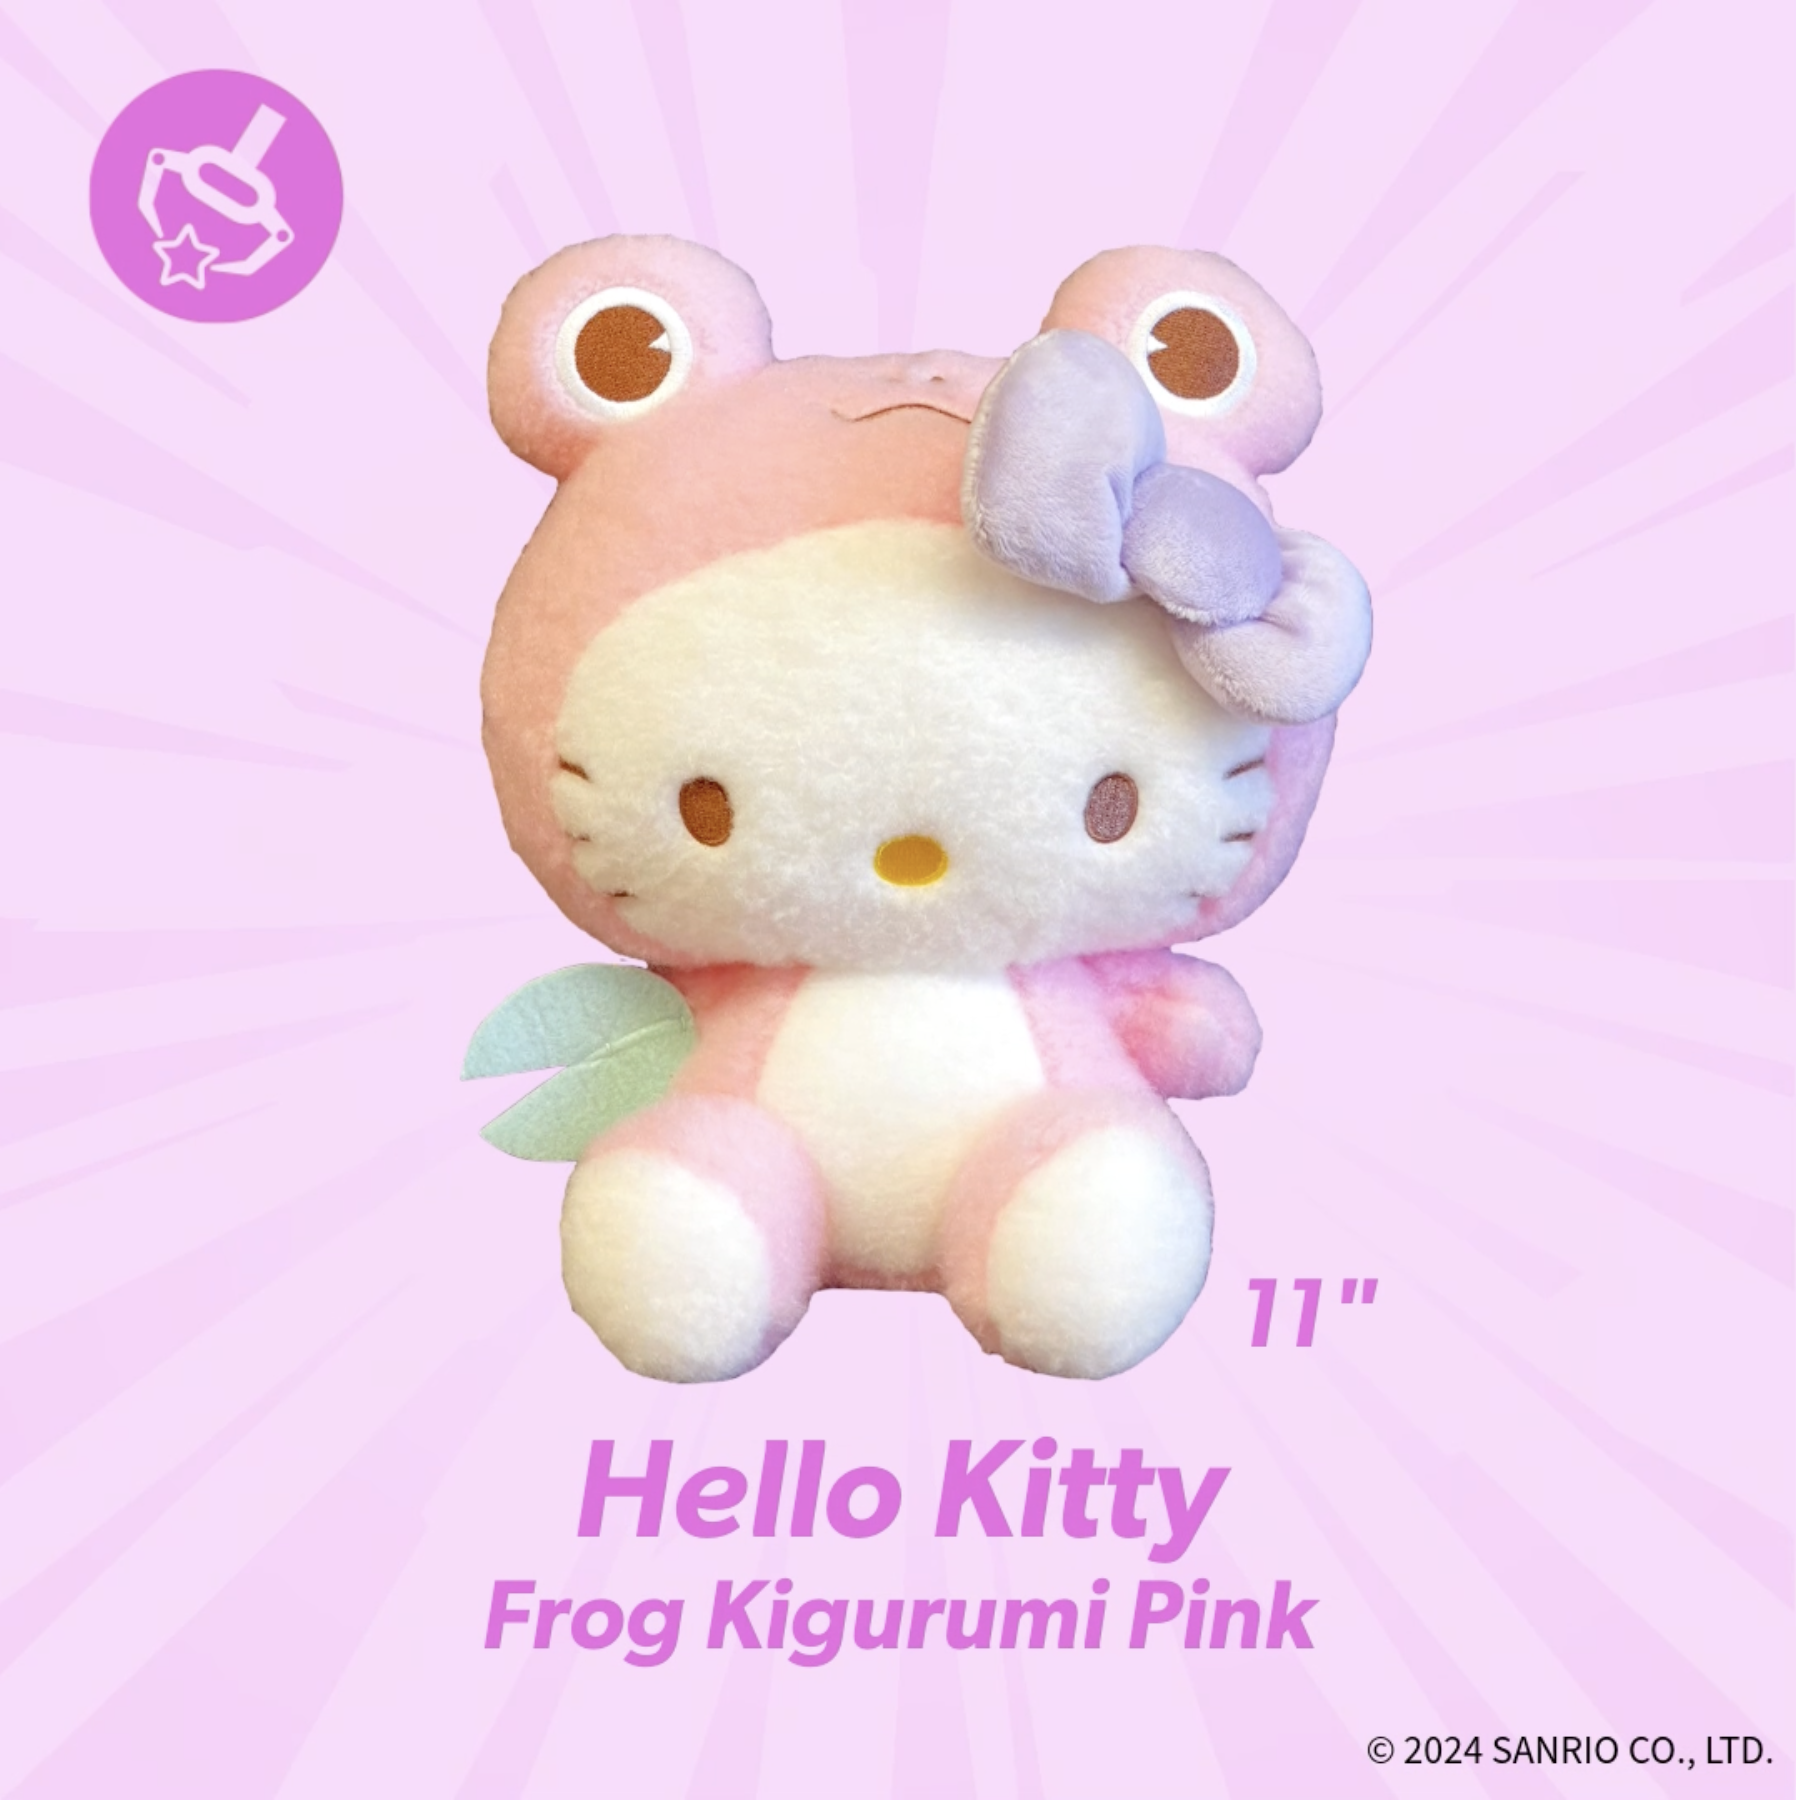 Round1 Arcade Crace Game Sanrio Hello Kitty Frog Kigurumi Pink plushie 11 " 